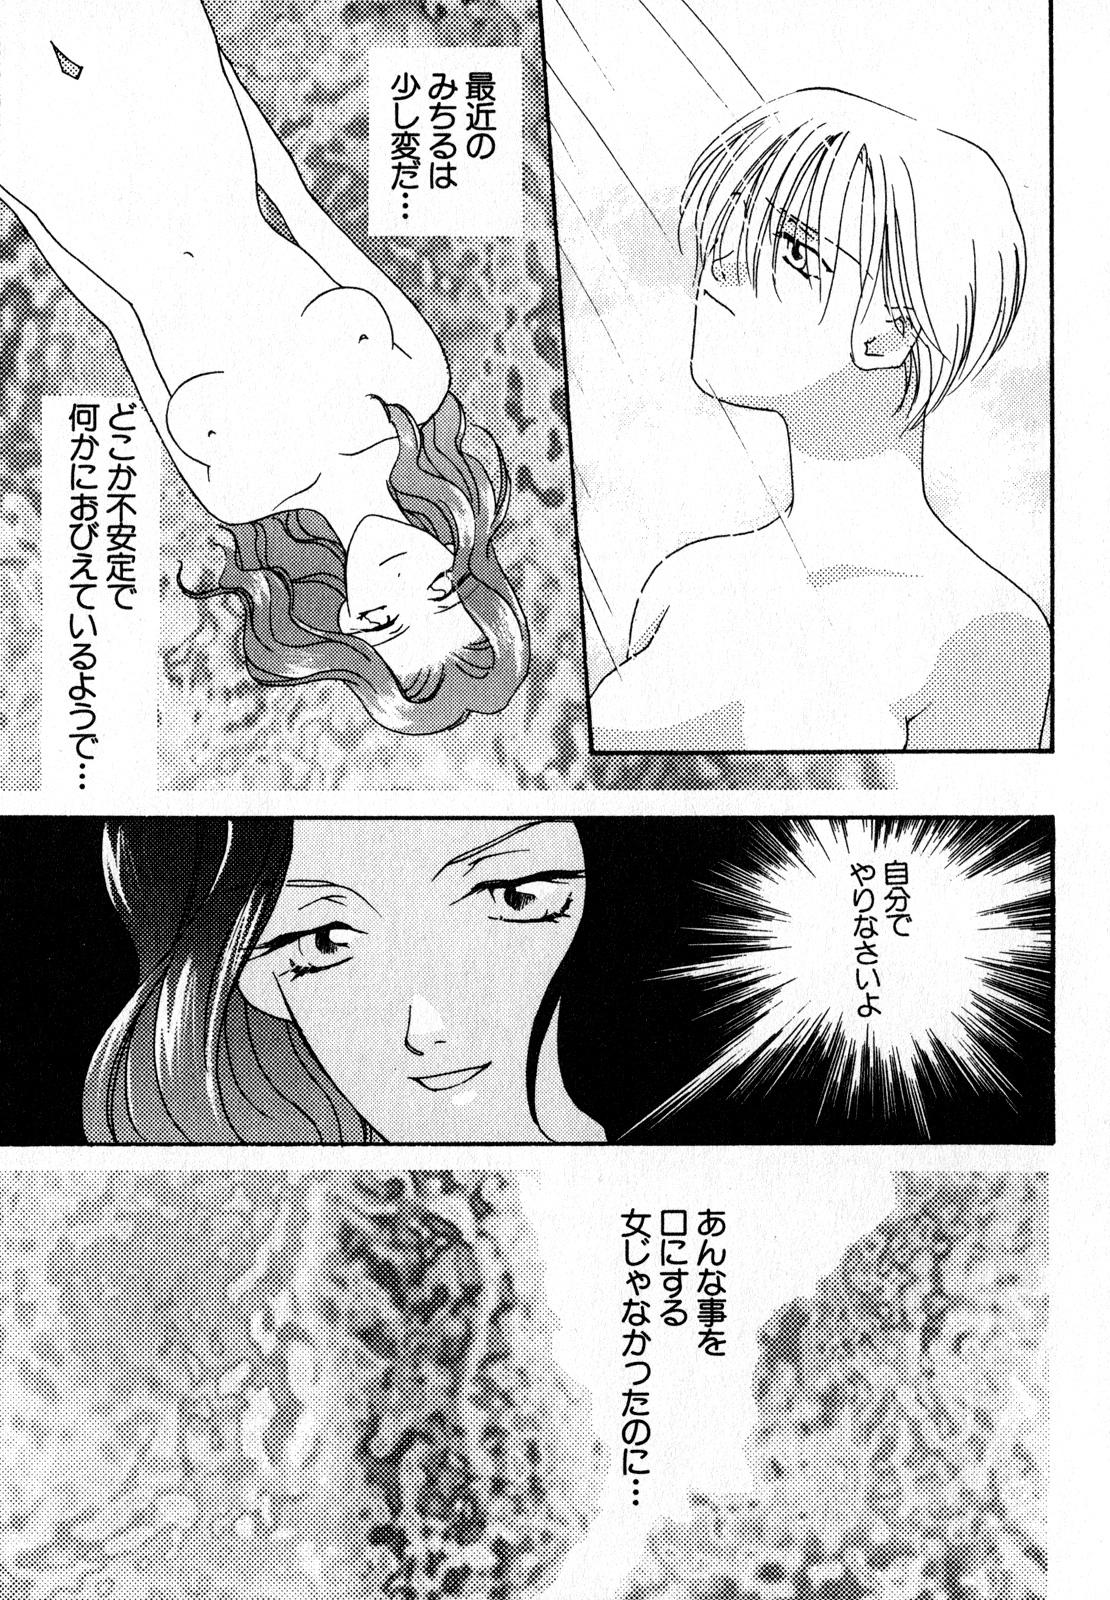 Celebrity Sex Scene Lunatic Party 7 - Sailor moon Bizarre - Page 10